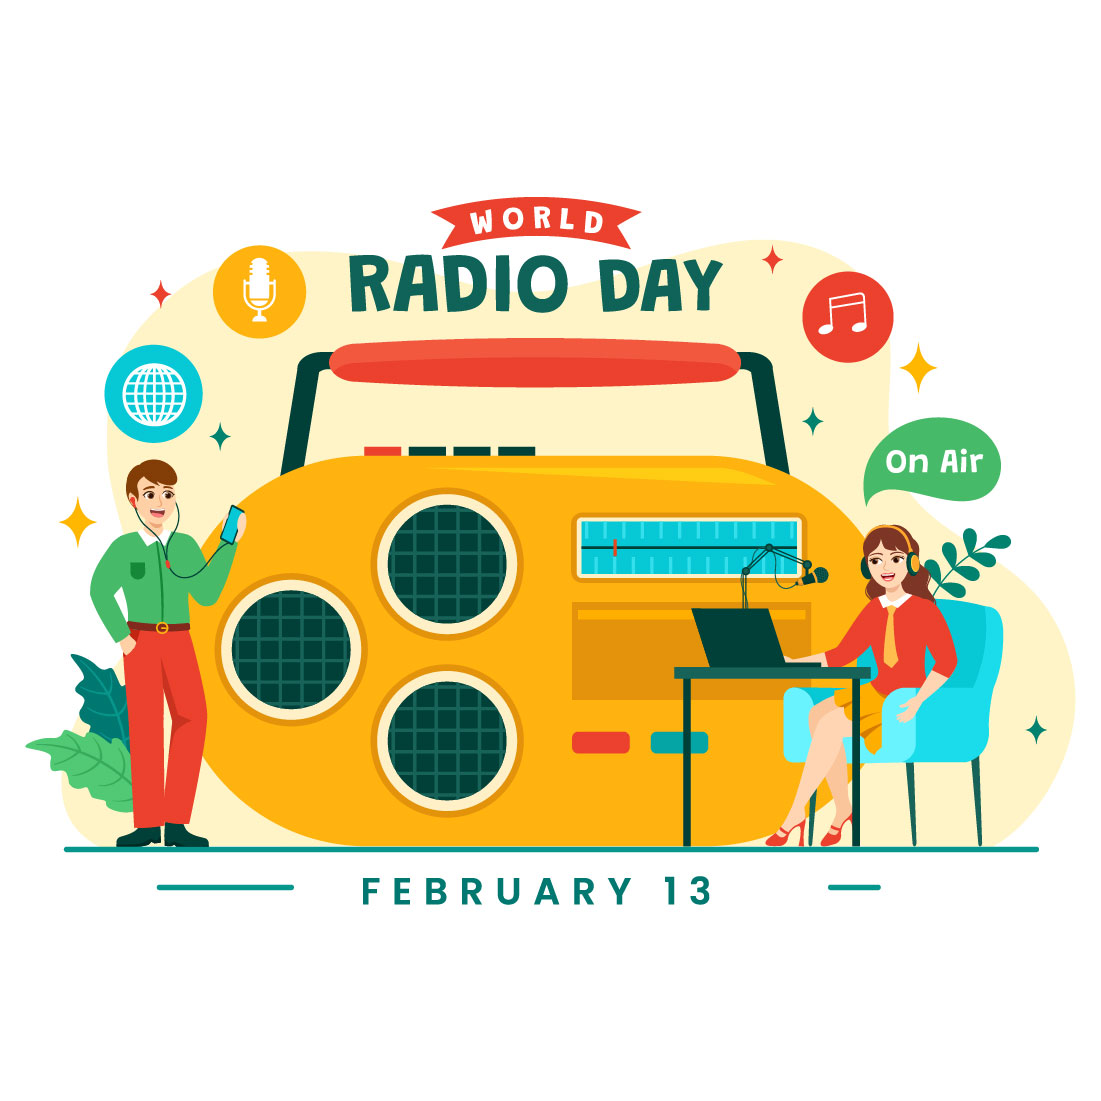 13 World Radio Day Illustration cover image.